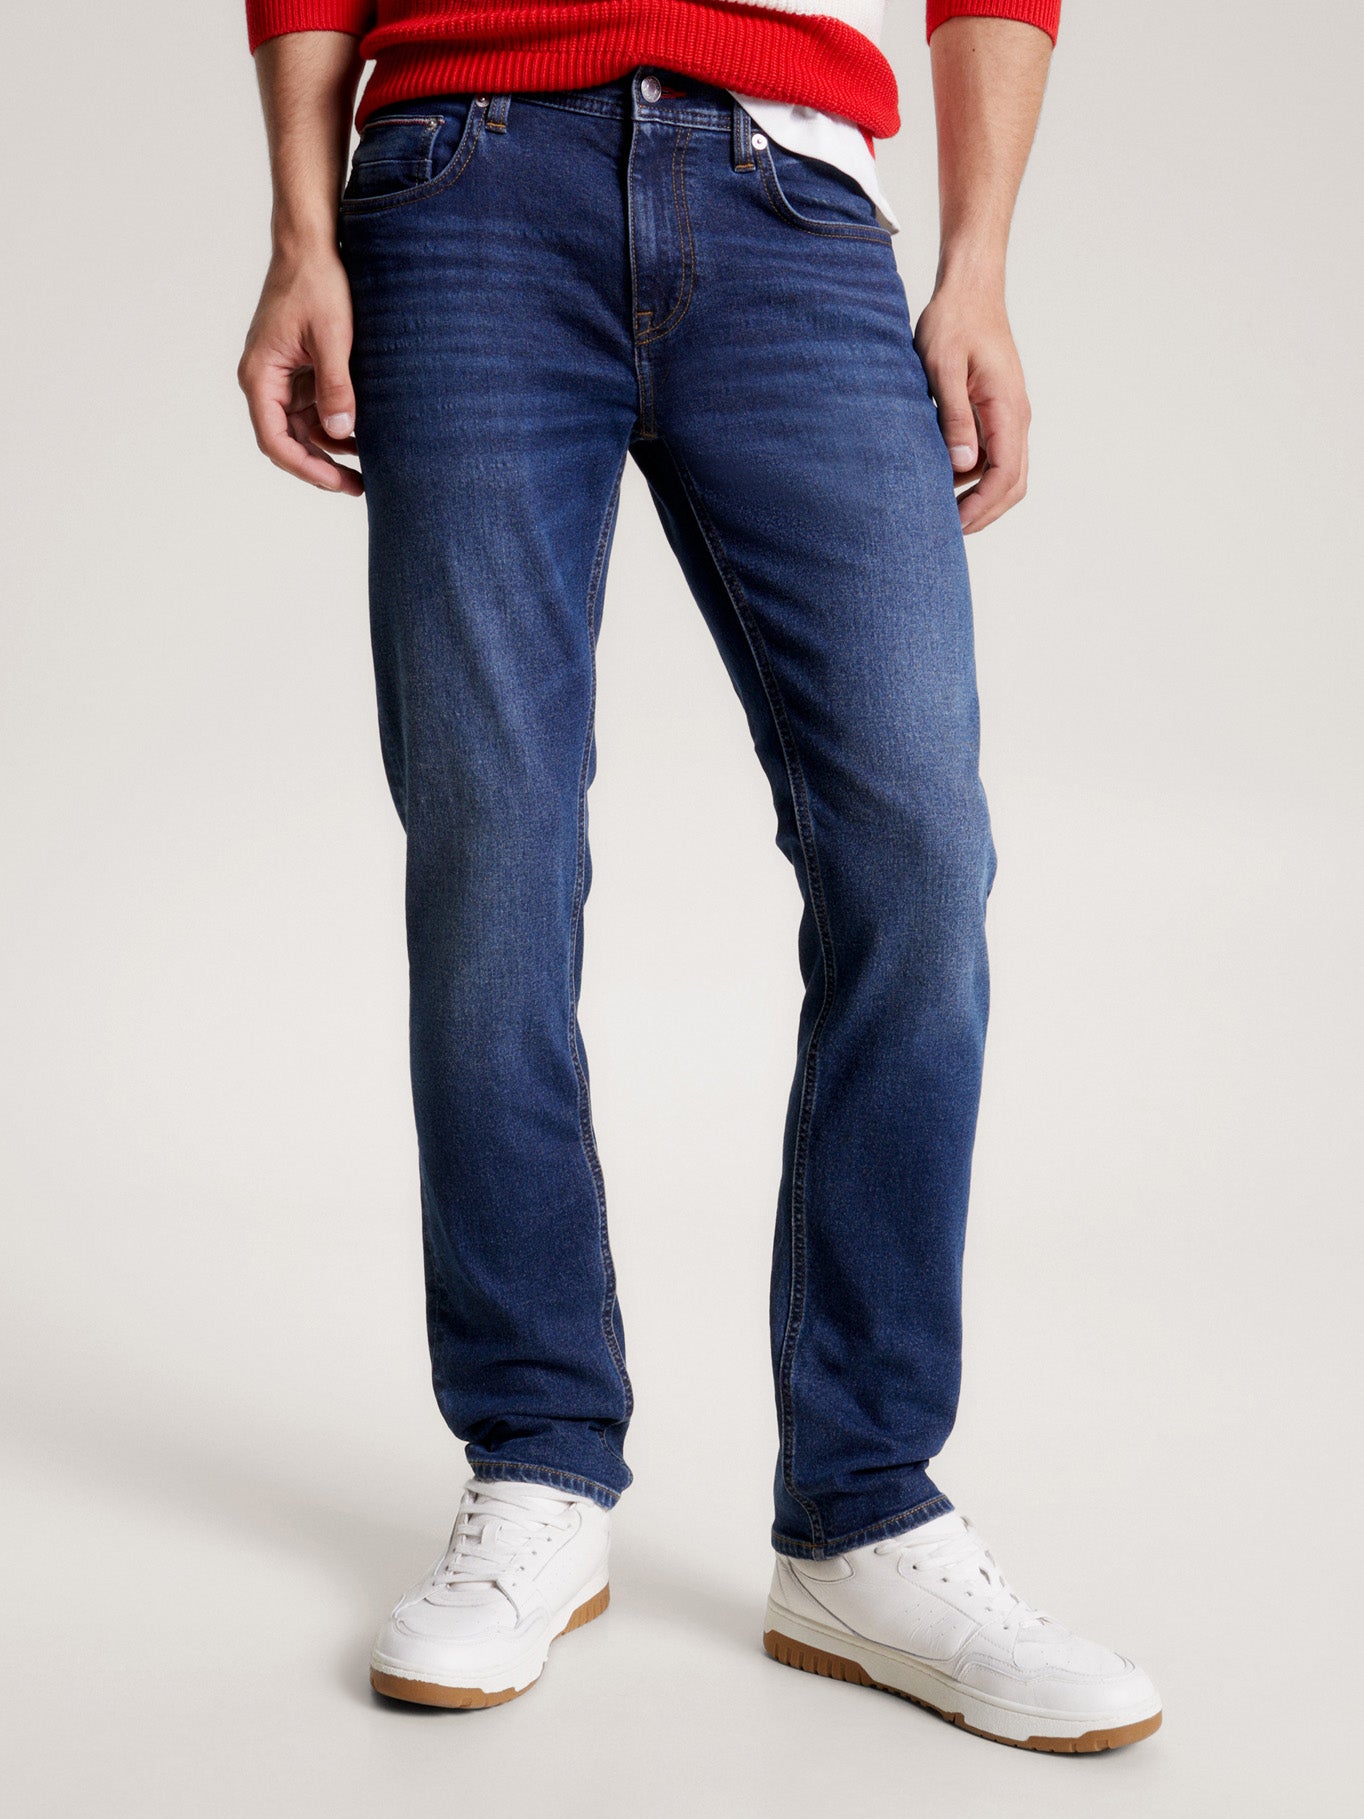 pantalones-jeans-tommy-hilfiger-p-caballeros-1